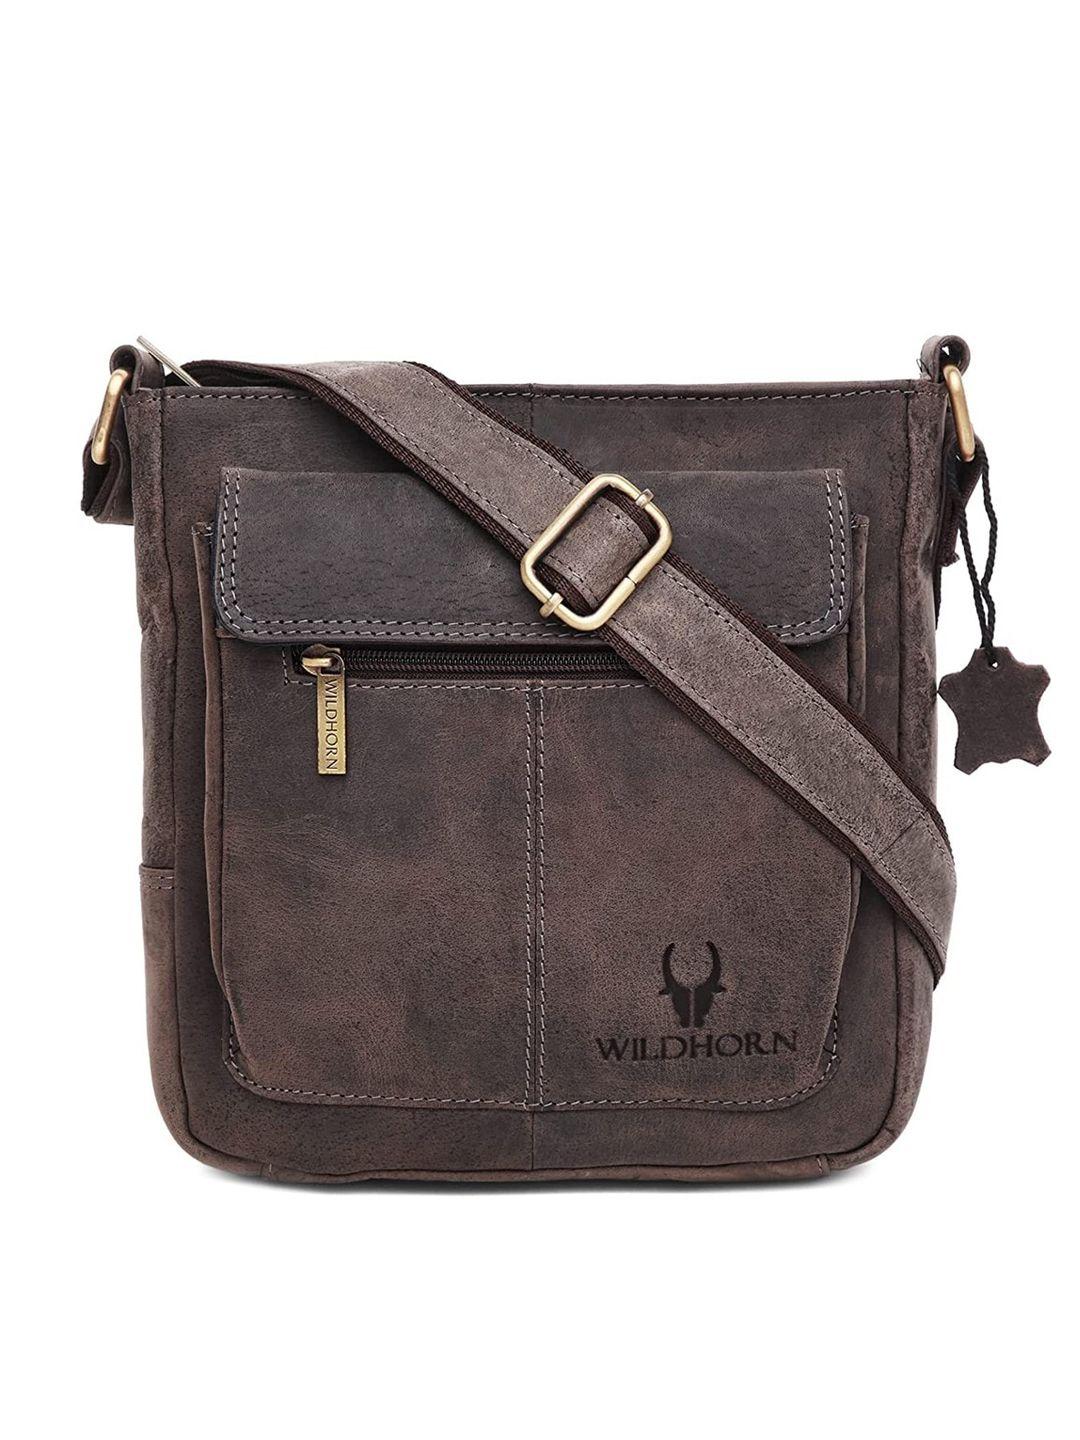 wildhorn grey textured leather sling bag